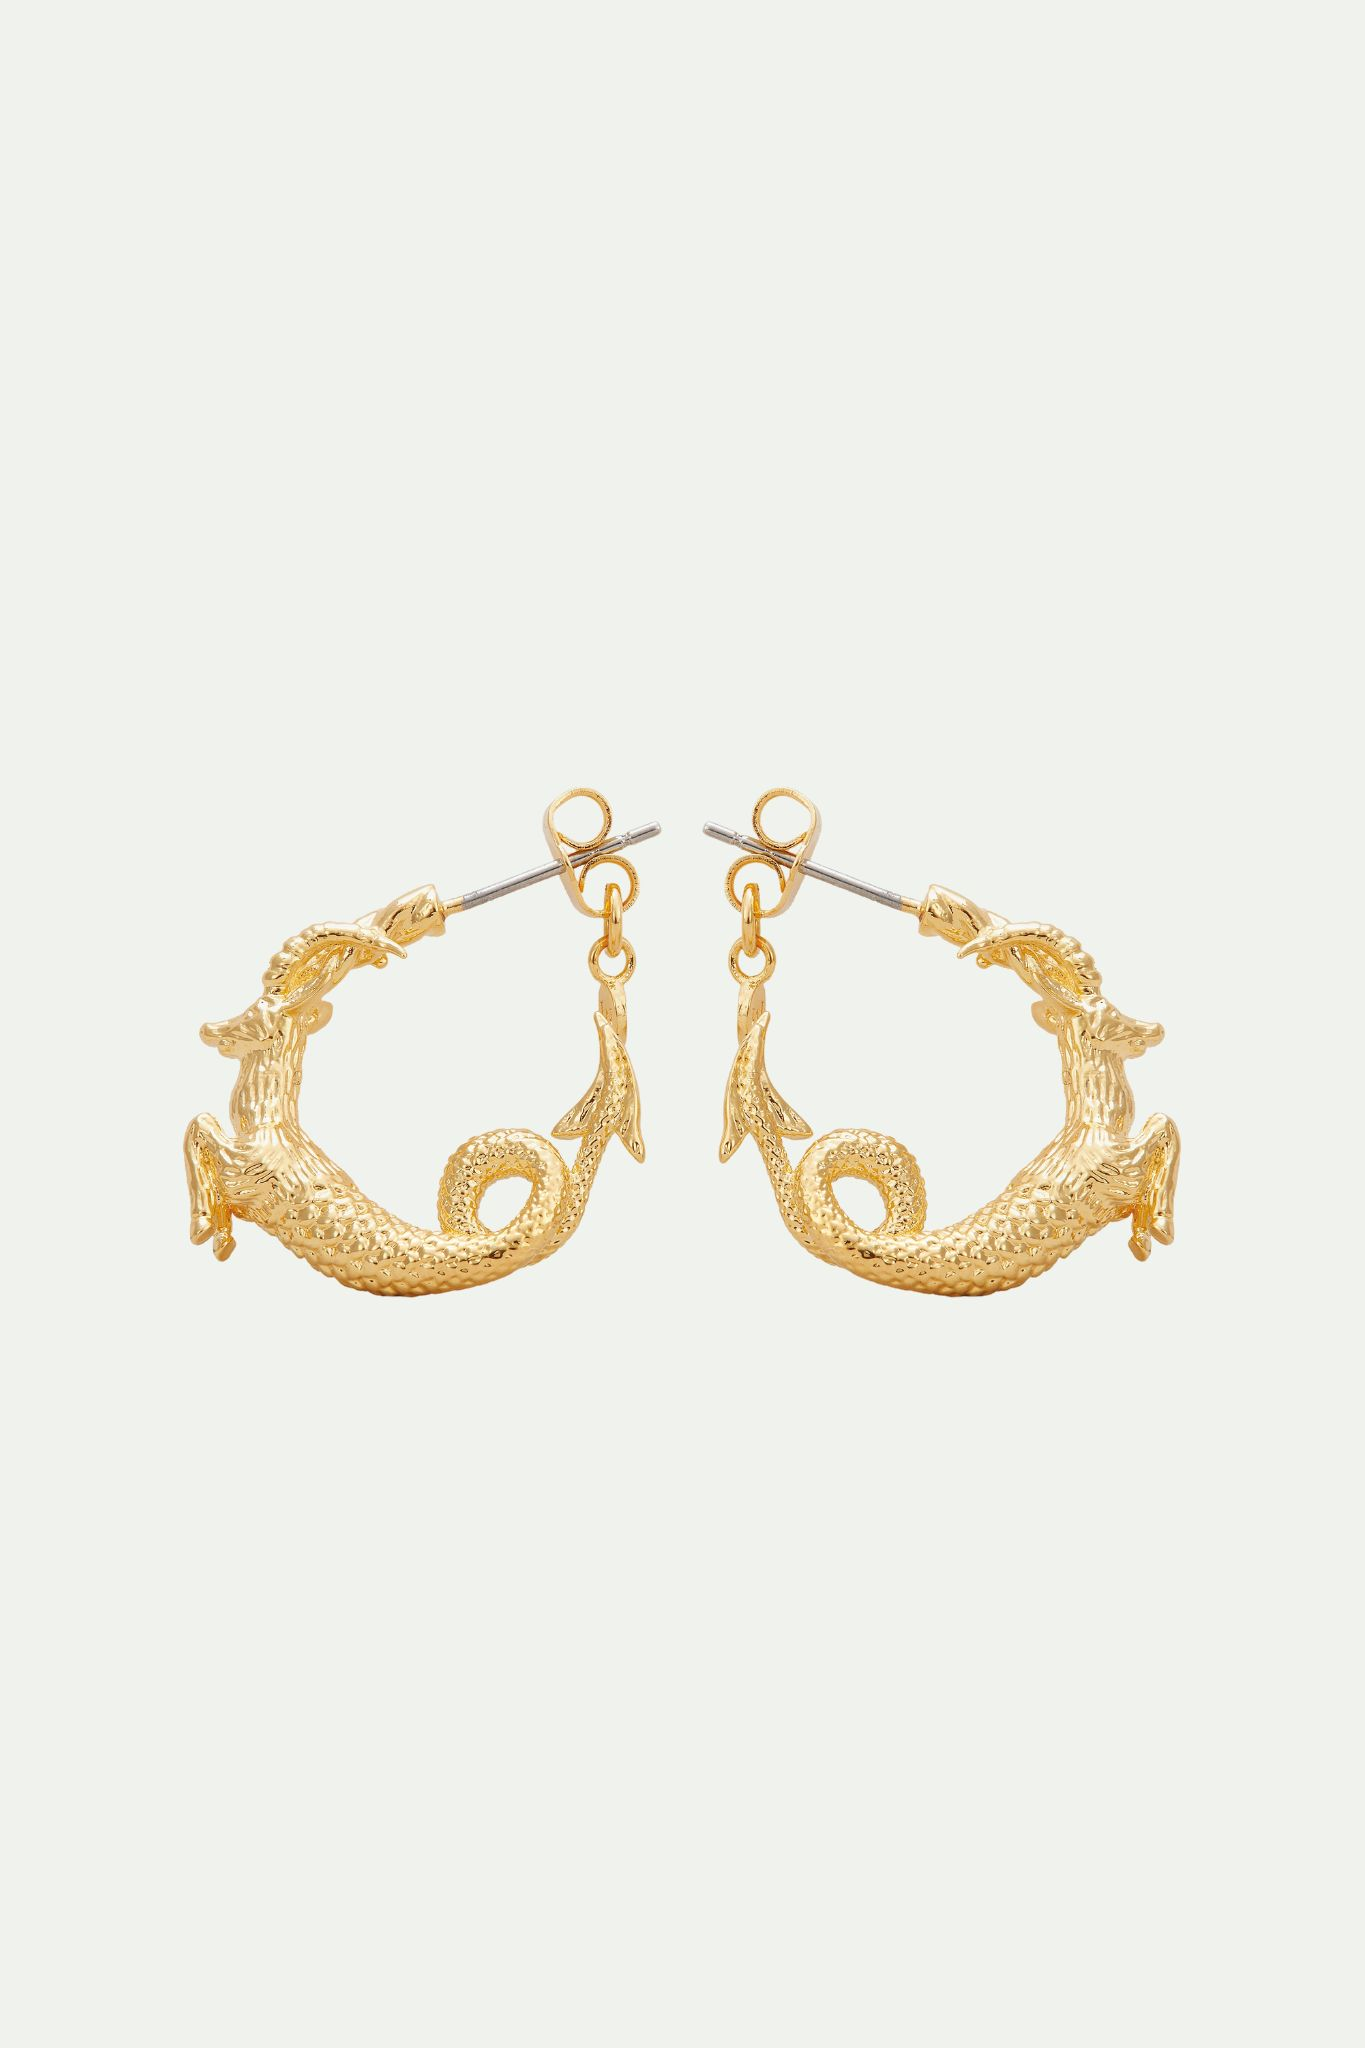 Capricornus zodiac sign hoops earrings